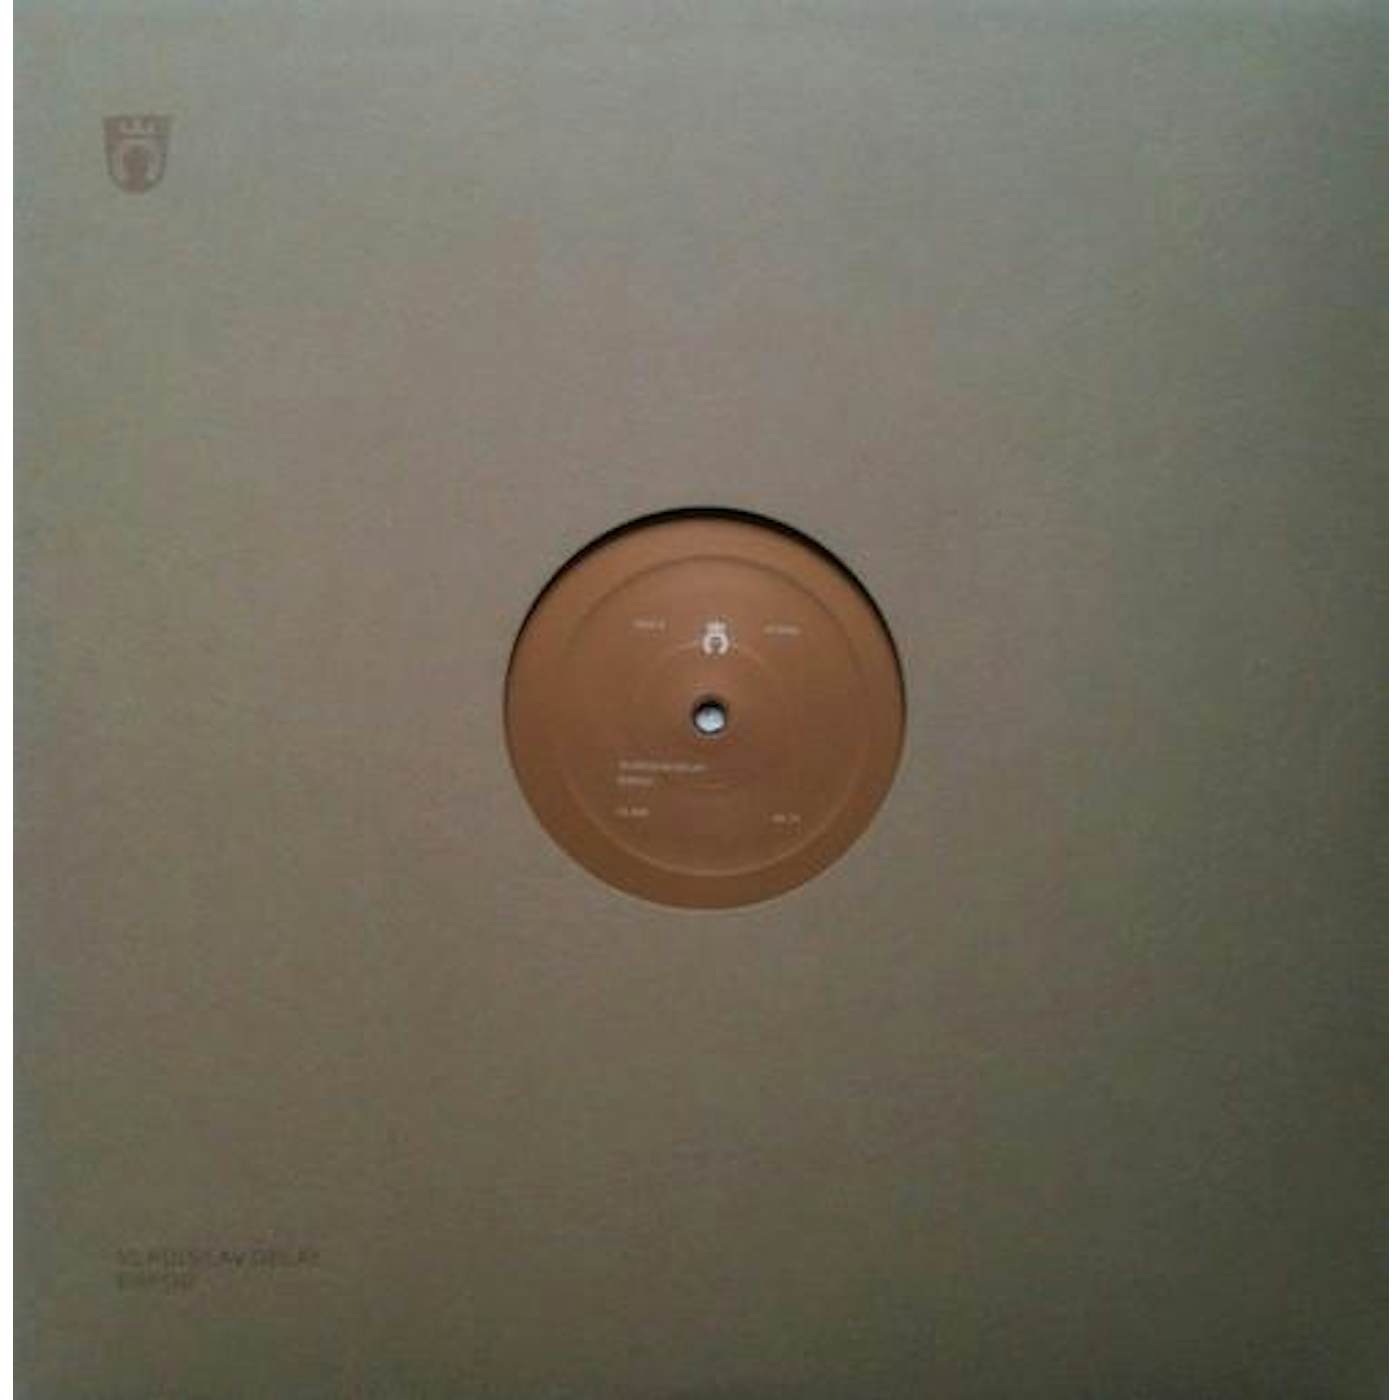 Vladislav Delay Espoo Vinyl Record